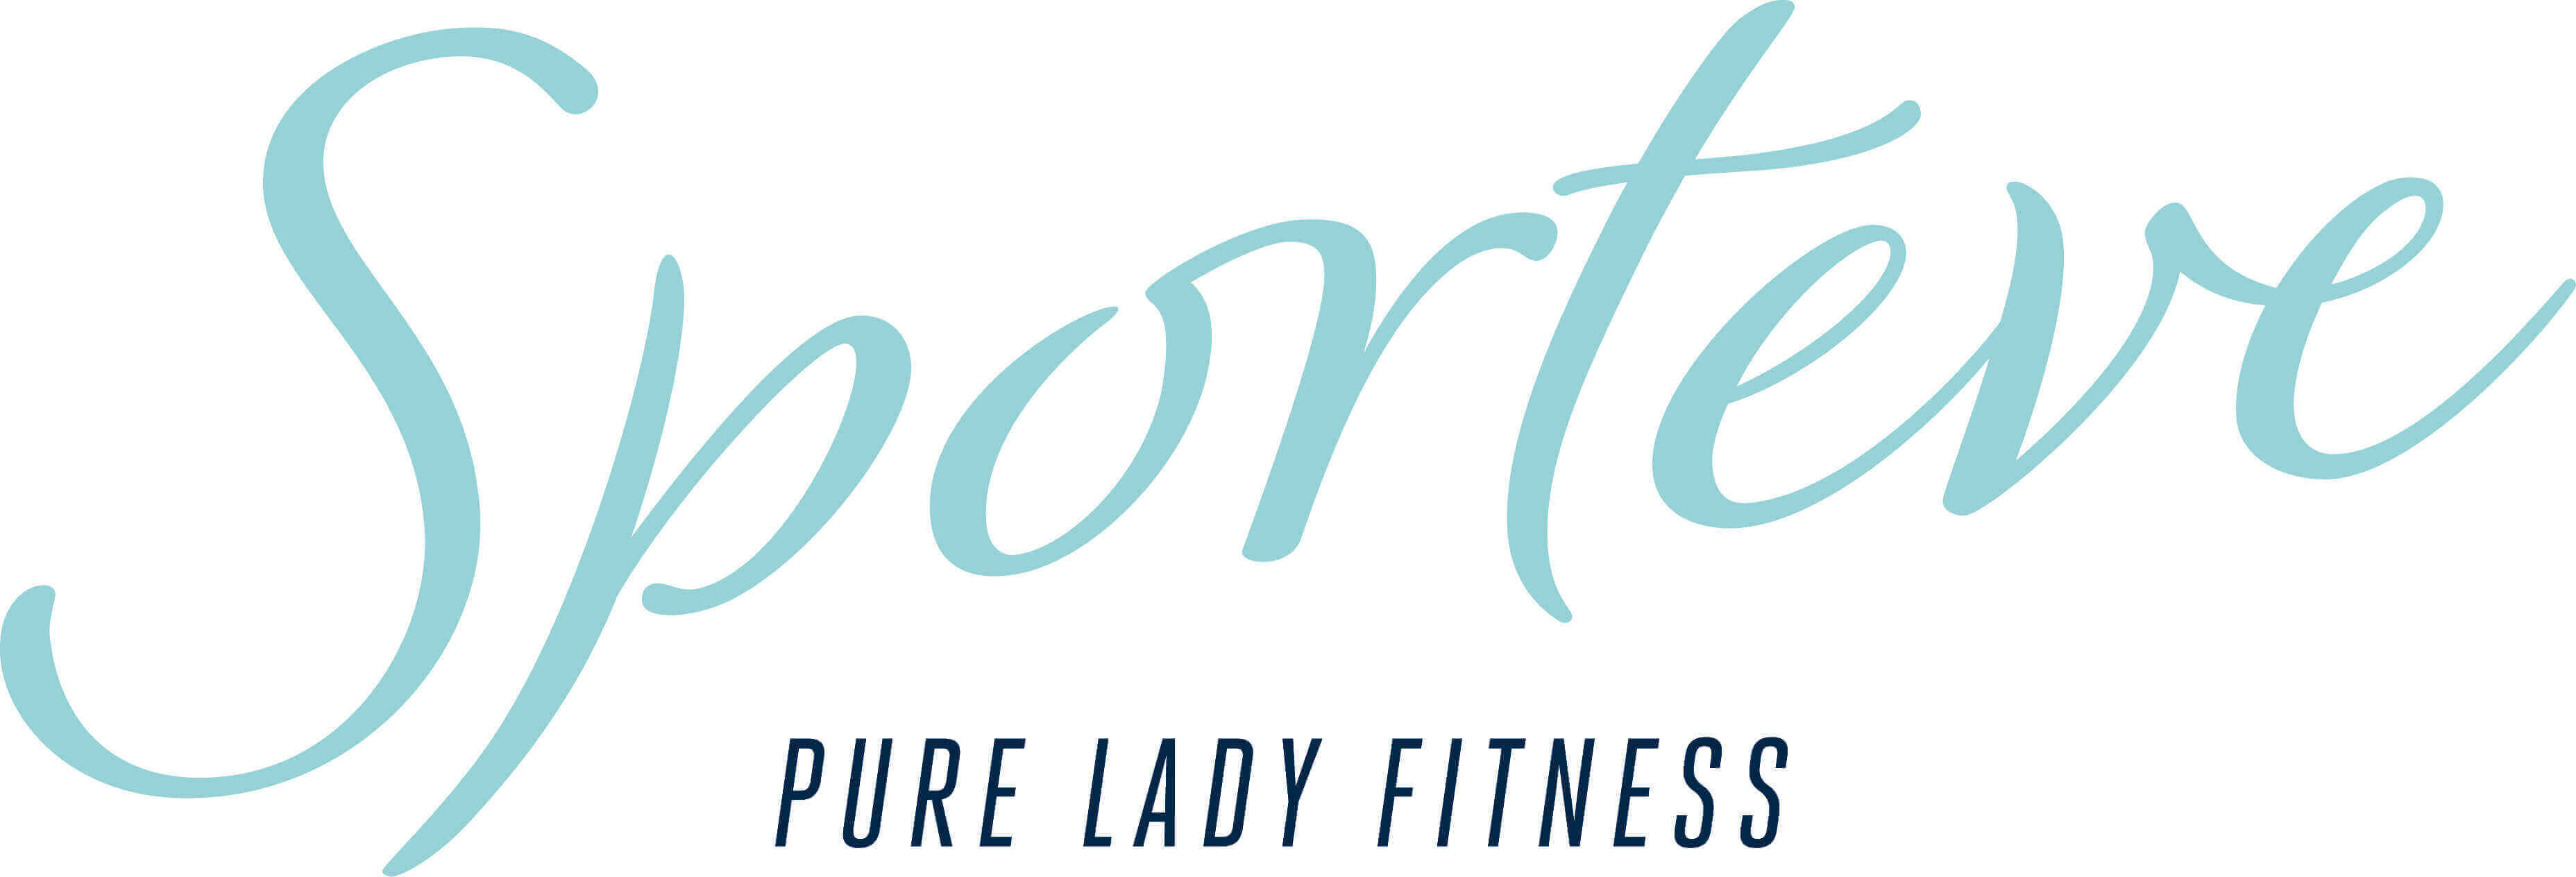 Logo Sporteve Ausbildungsbetrieb